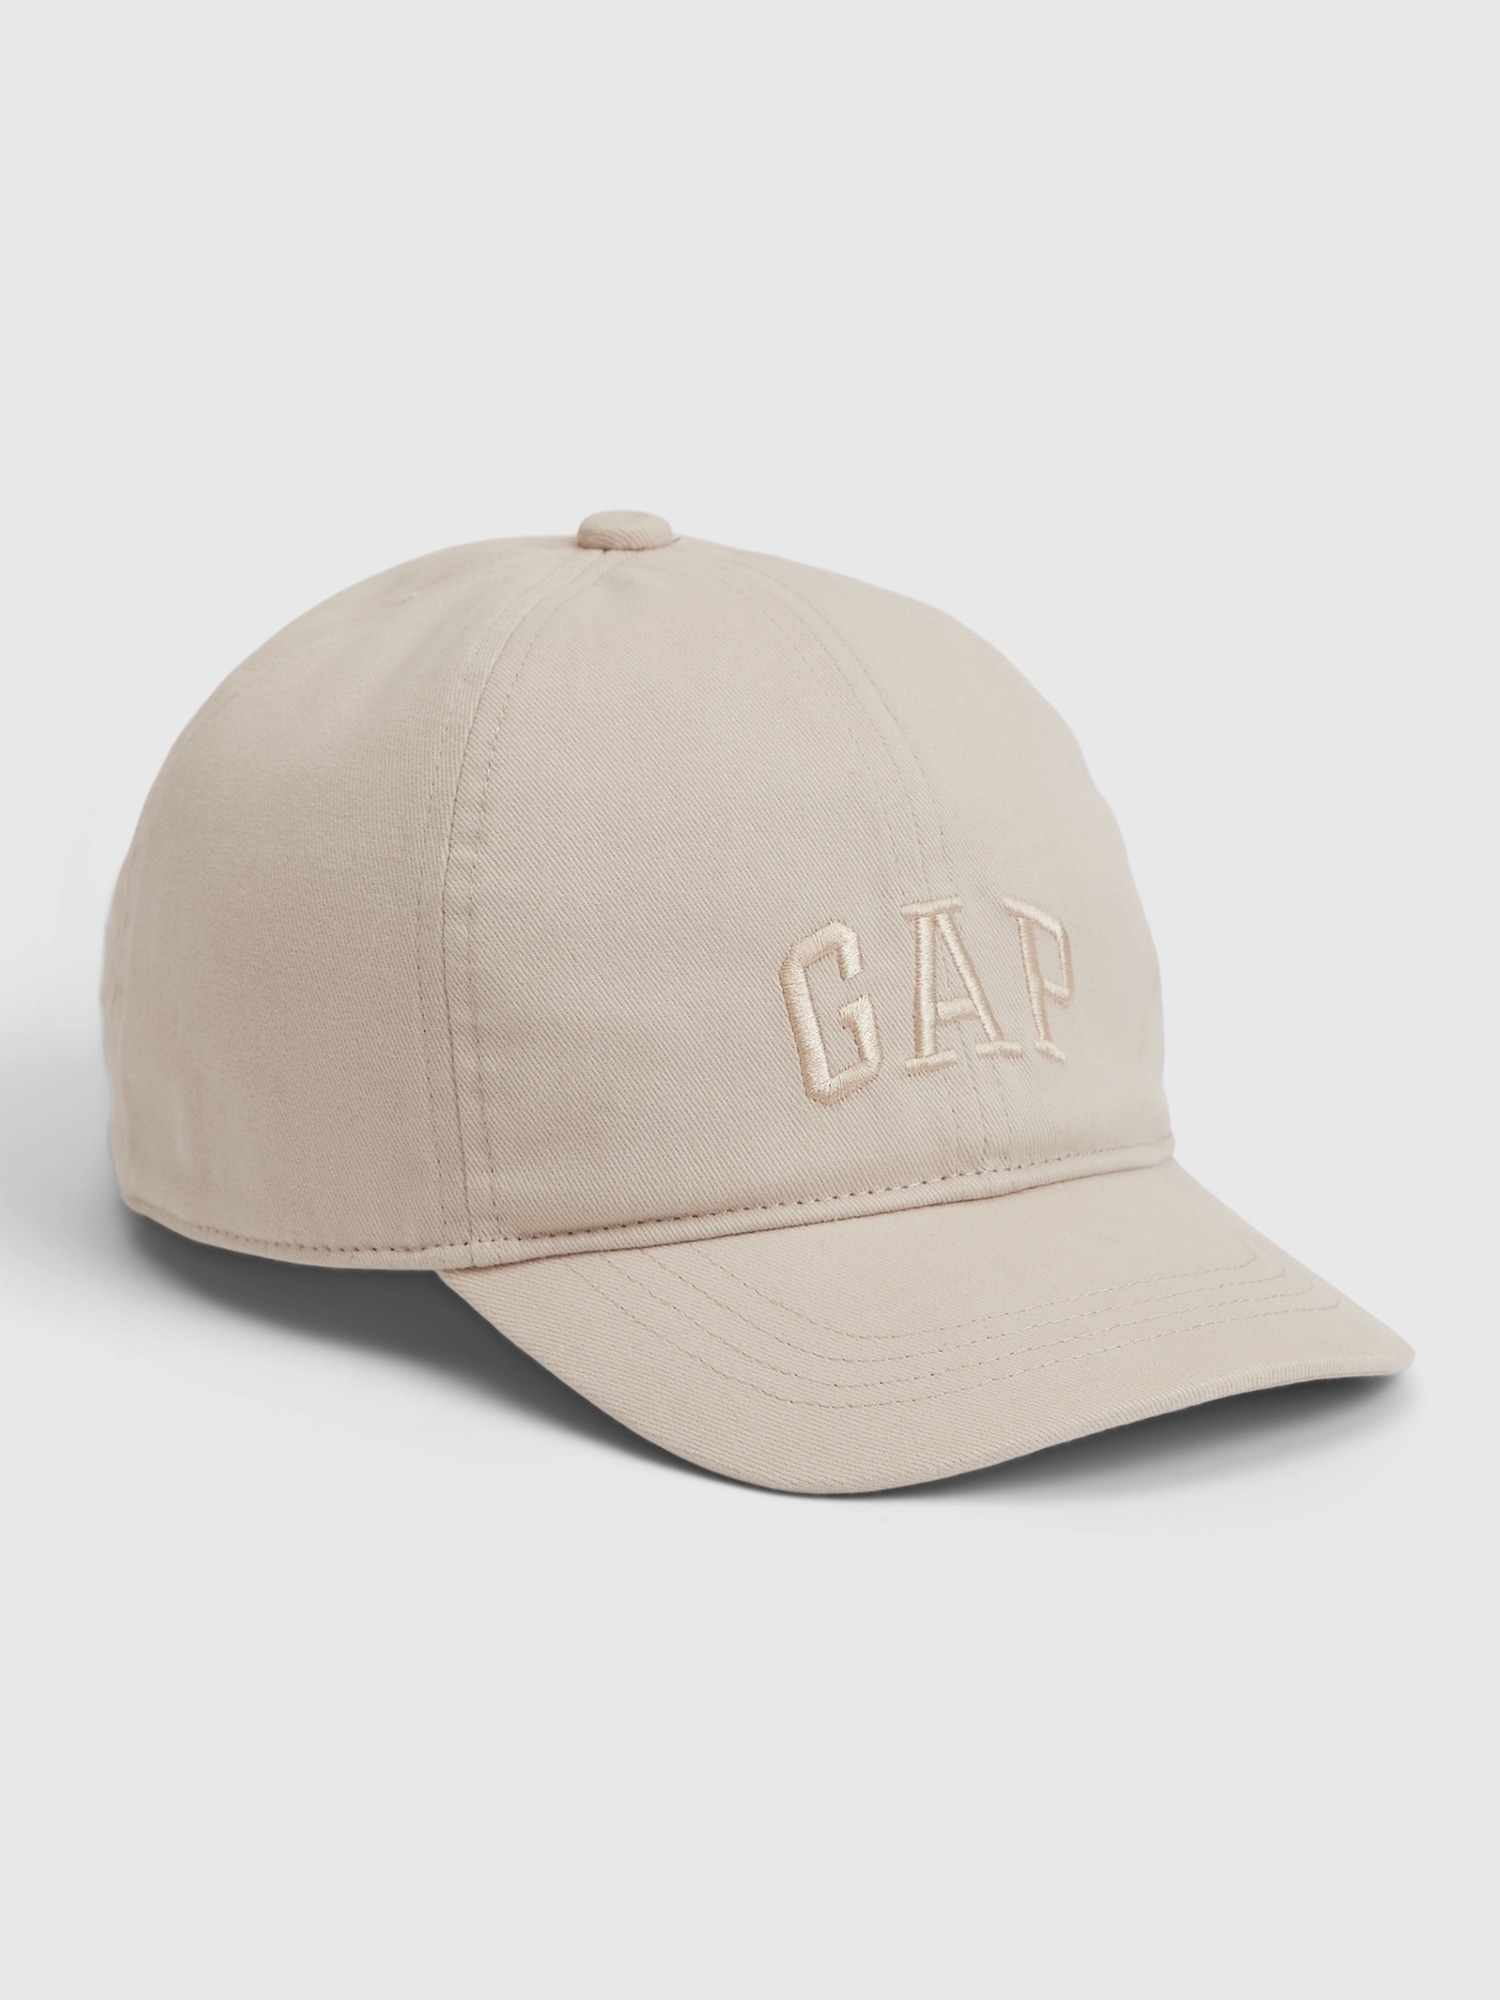 Kids Organic Cotton Gap Arch Logo Baseball Hat | Gap